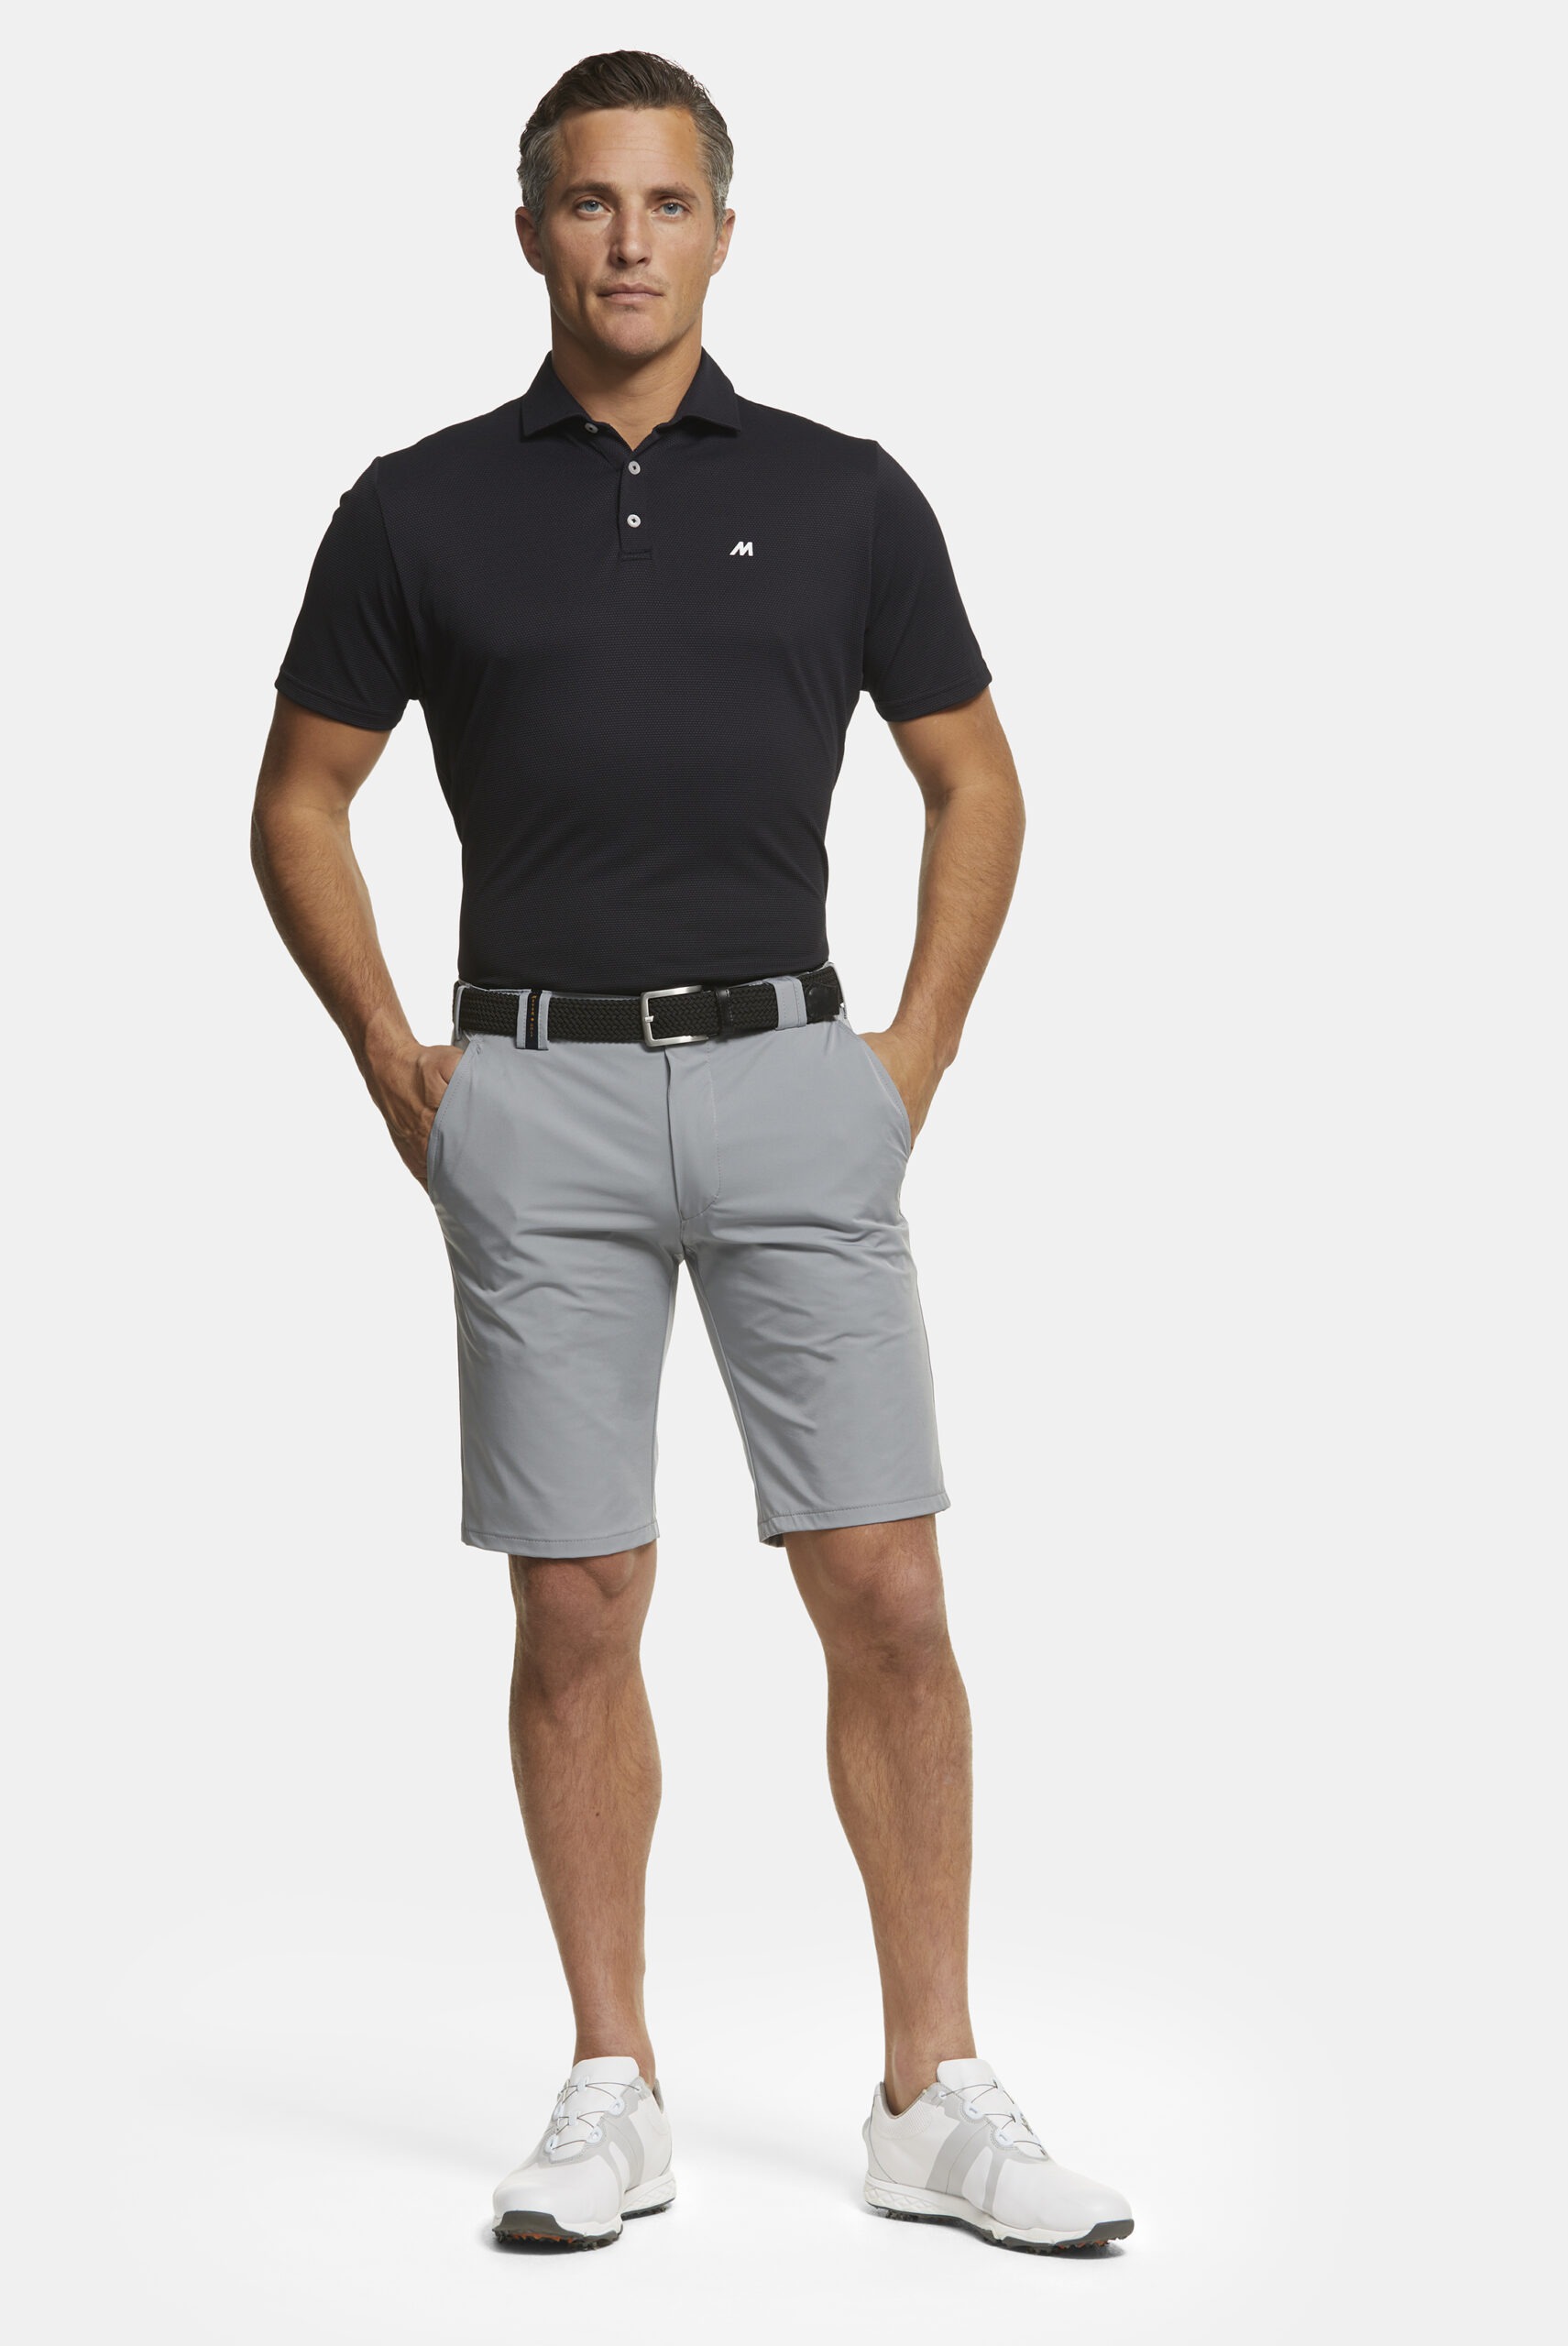 Golf Shorts • High Performance (St. Andrews 8070)